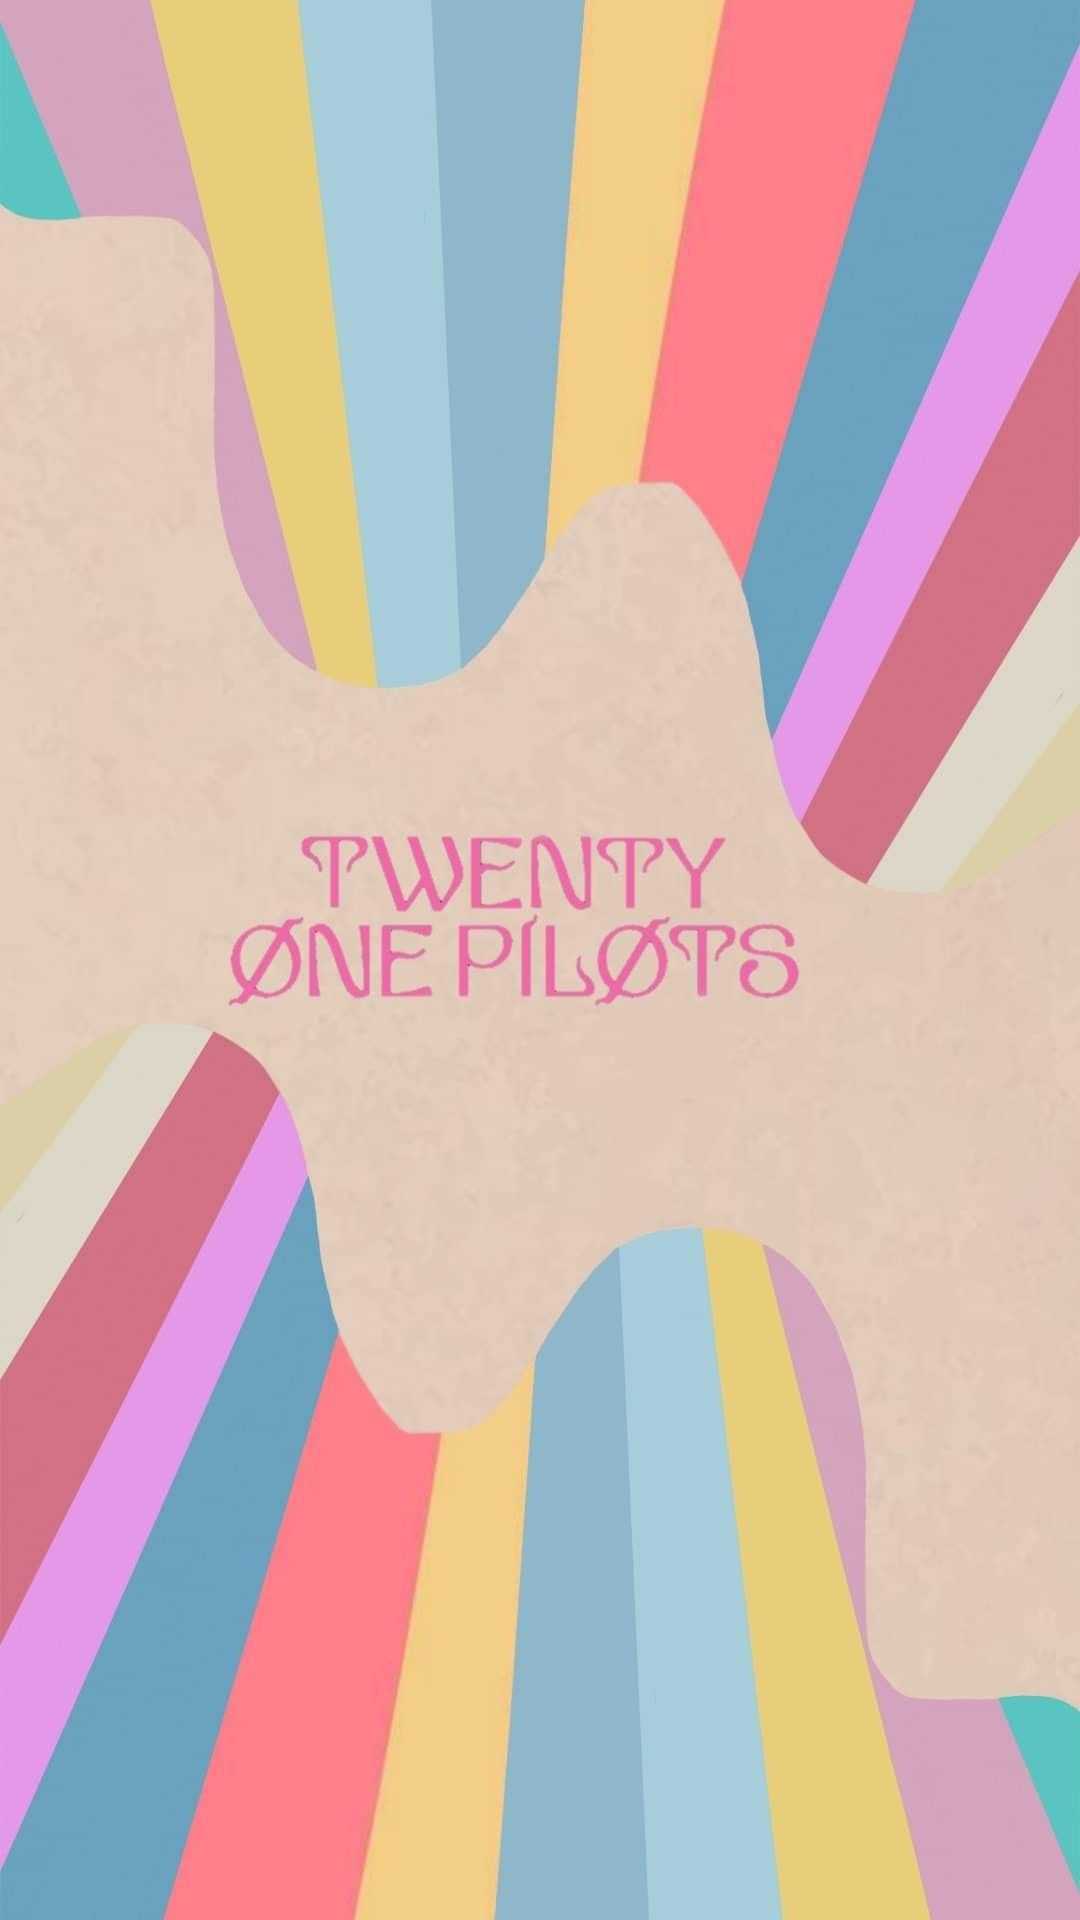 twenty one pilots wallpaper - Google Search  Twenty one pilots, Twenty one  pilots aesthetic, Twenty one pilots wallpaper